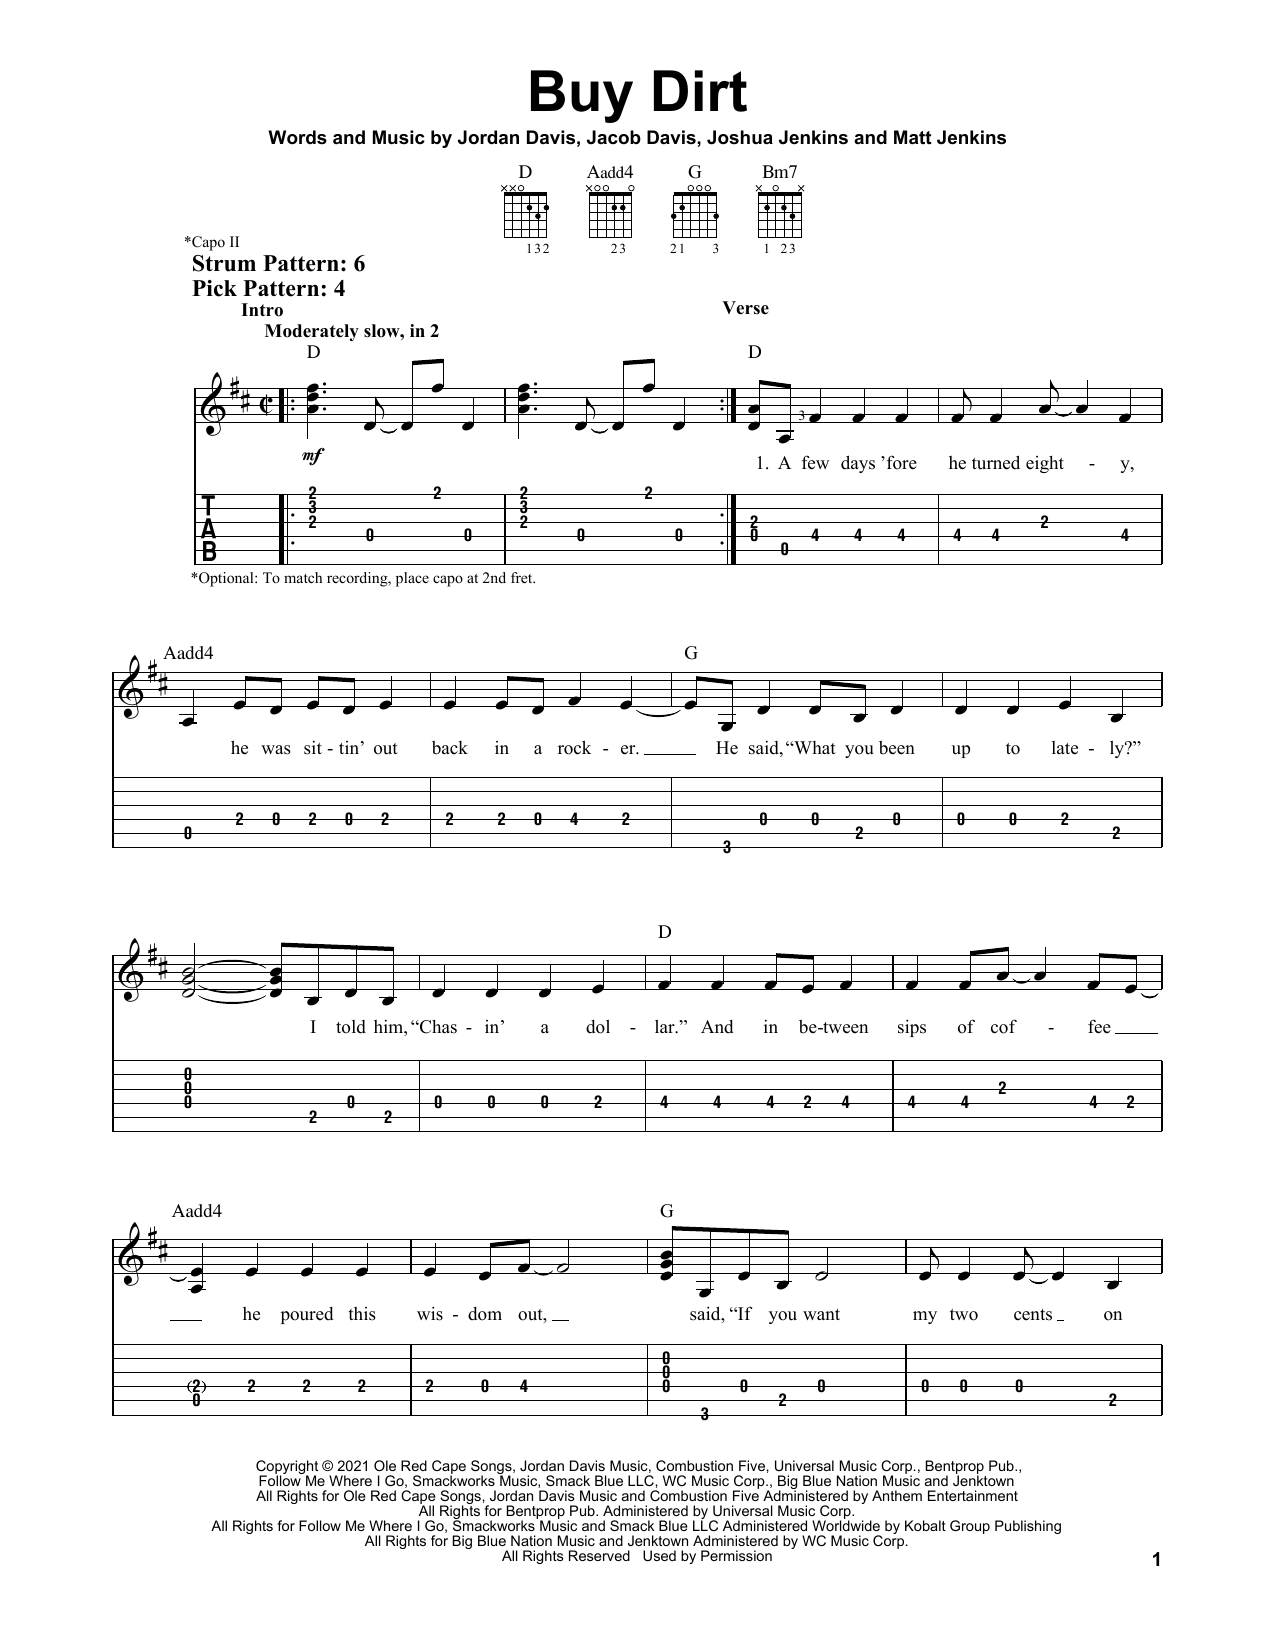 Jordan Davis and Luke Bryan Buy Dirt Sheet Music Notes & Chords for Piano, Vocal & Guitar Chords (Right-Hand Melody) - Download or Print PDF